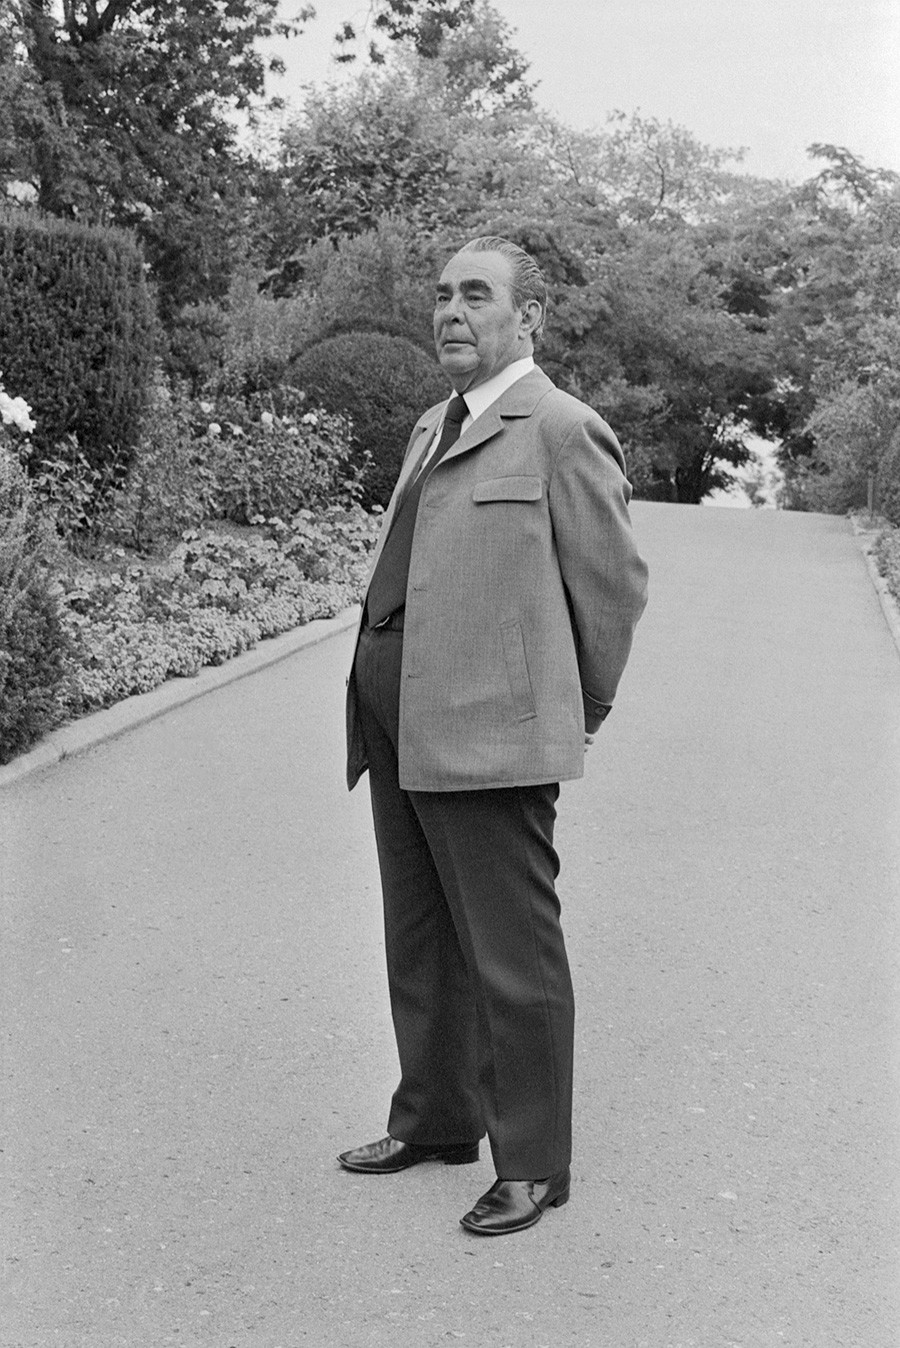 Leonid Brezhnev liked to keep things simple.